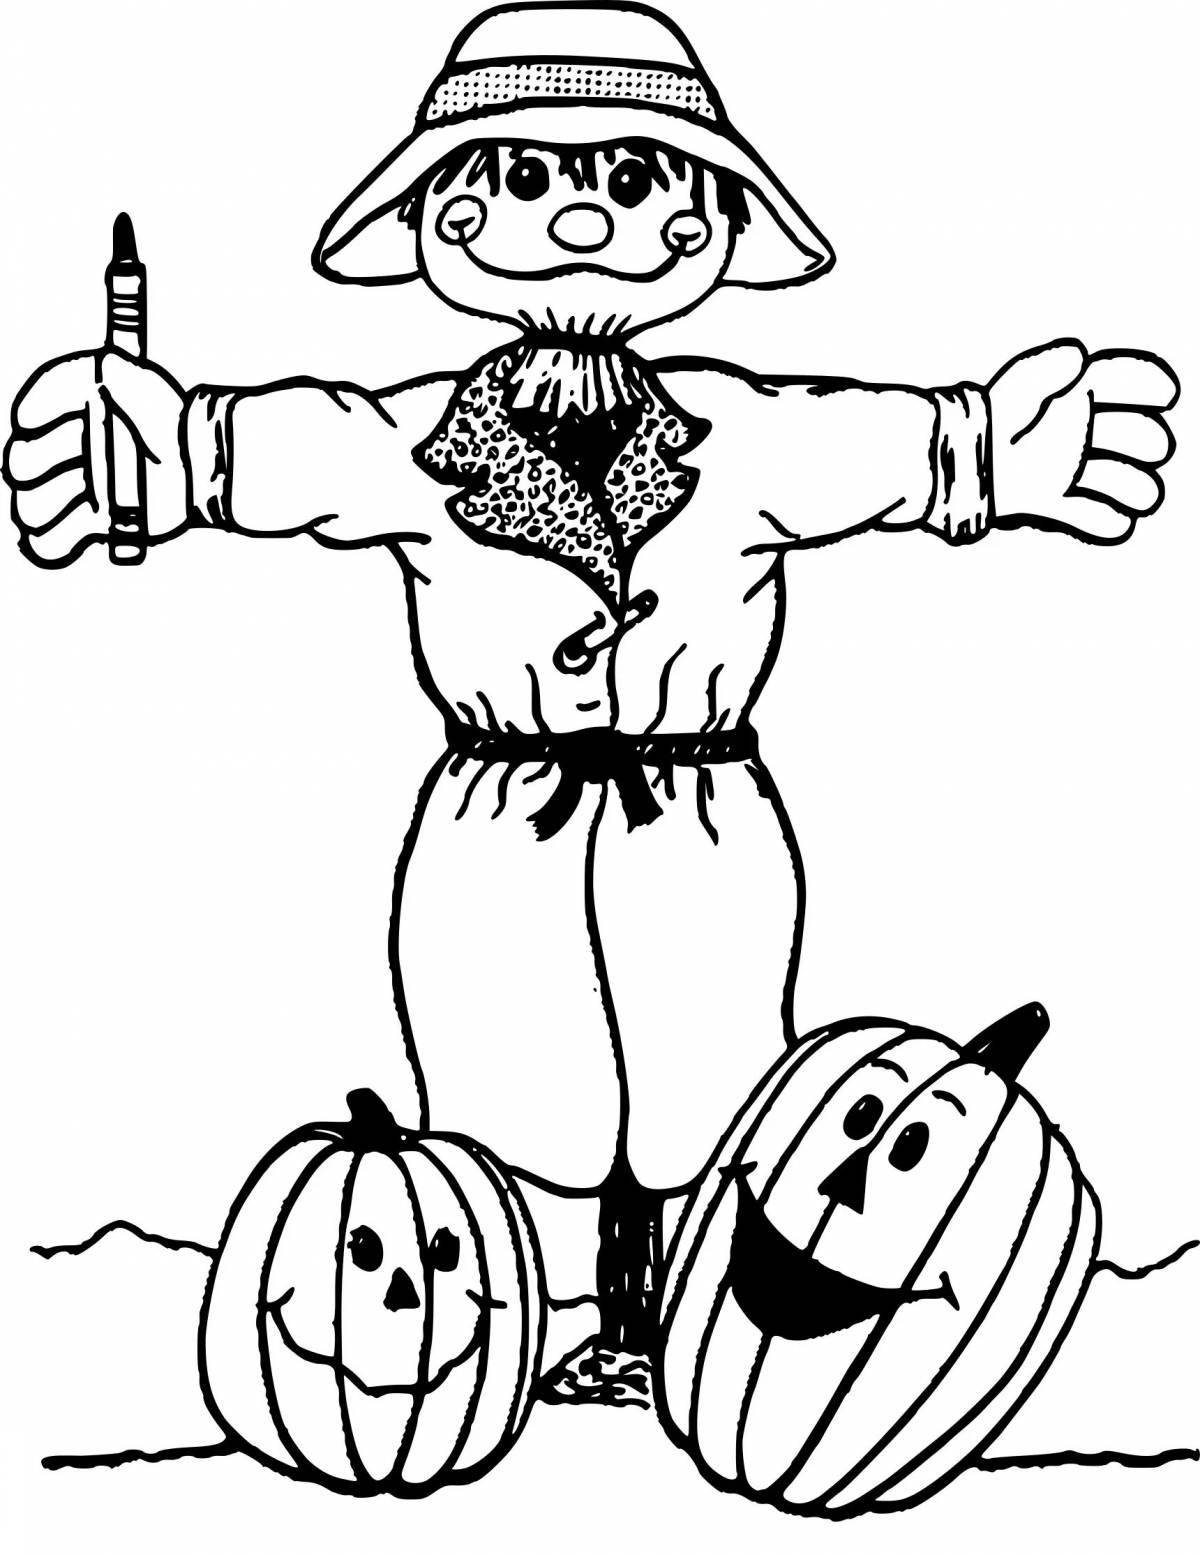 Attractive scarecrow coloring page